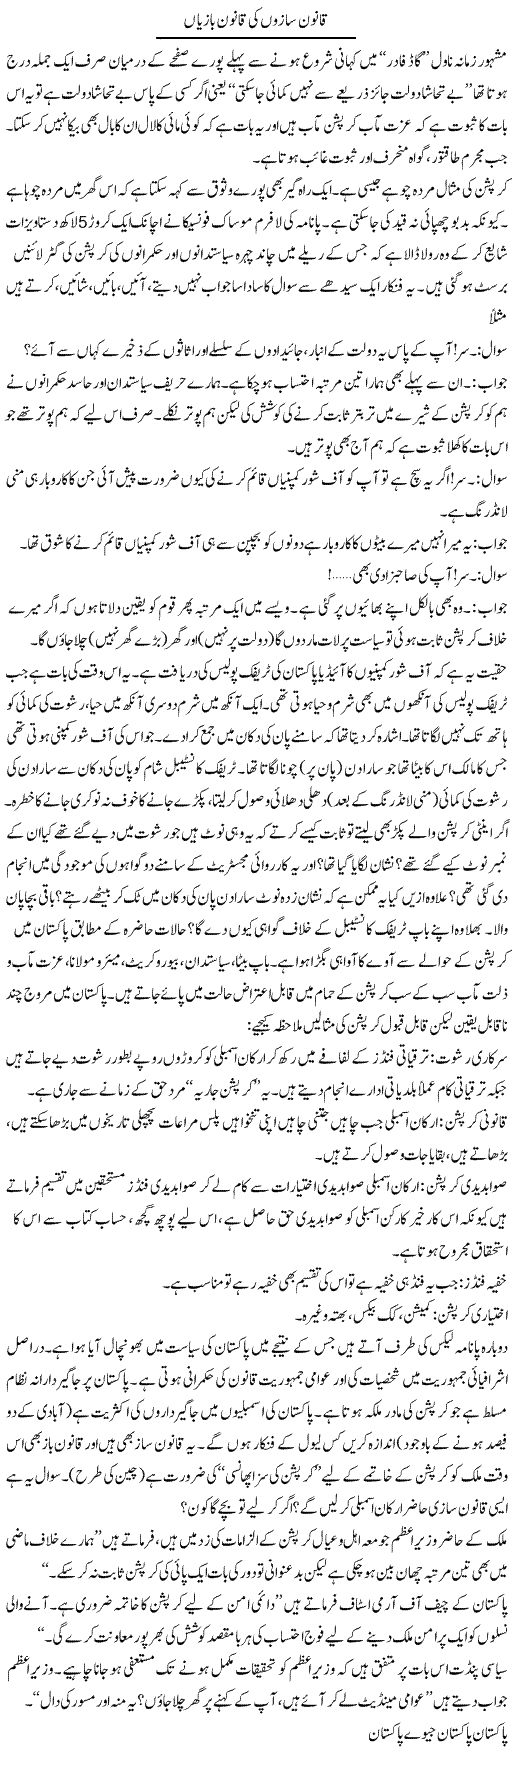 Qanoon Sazoon Ki Qanoon Bazyan | Jabbar Jaffer | Daily Urdu Columns